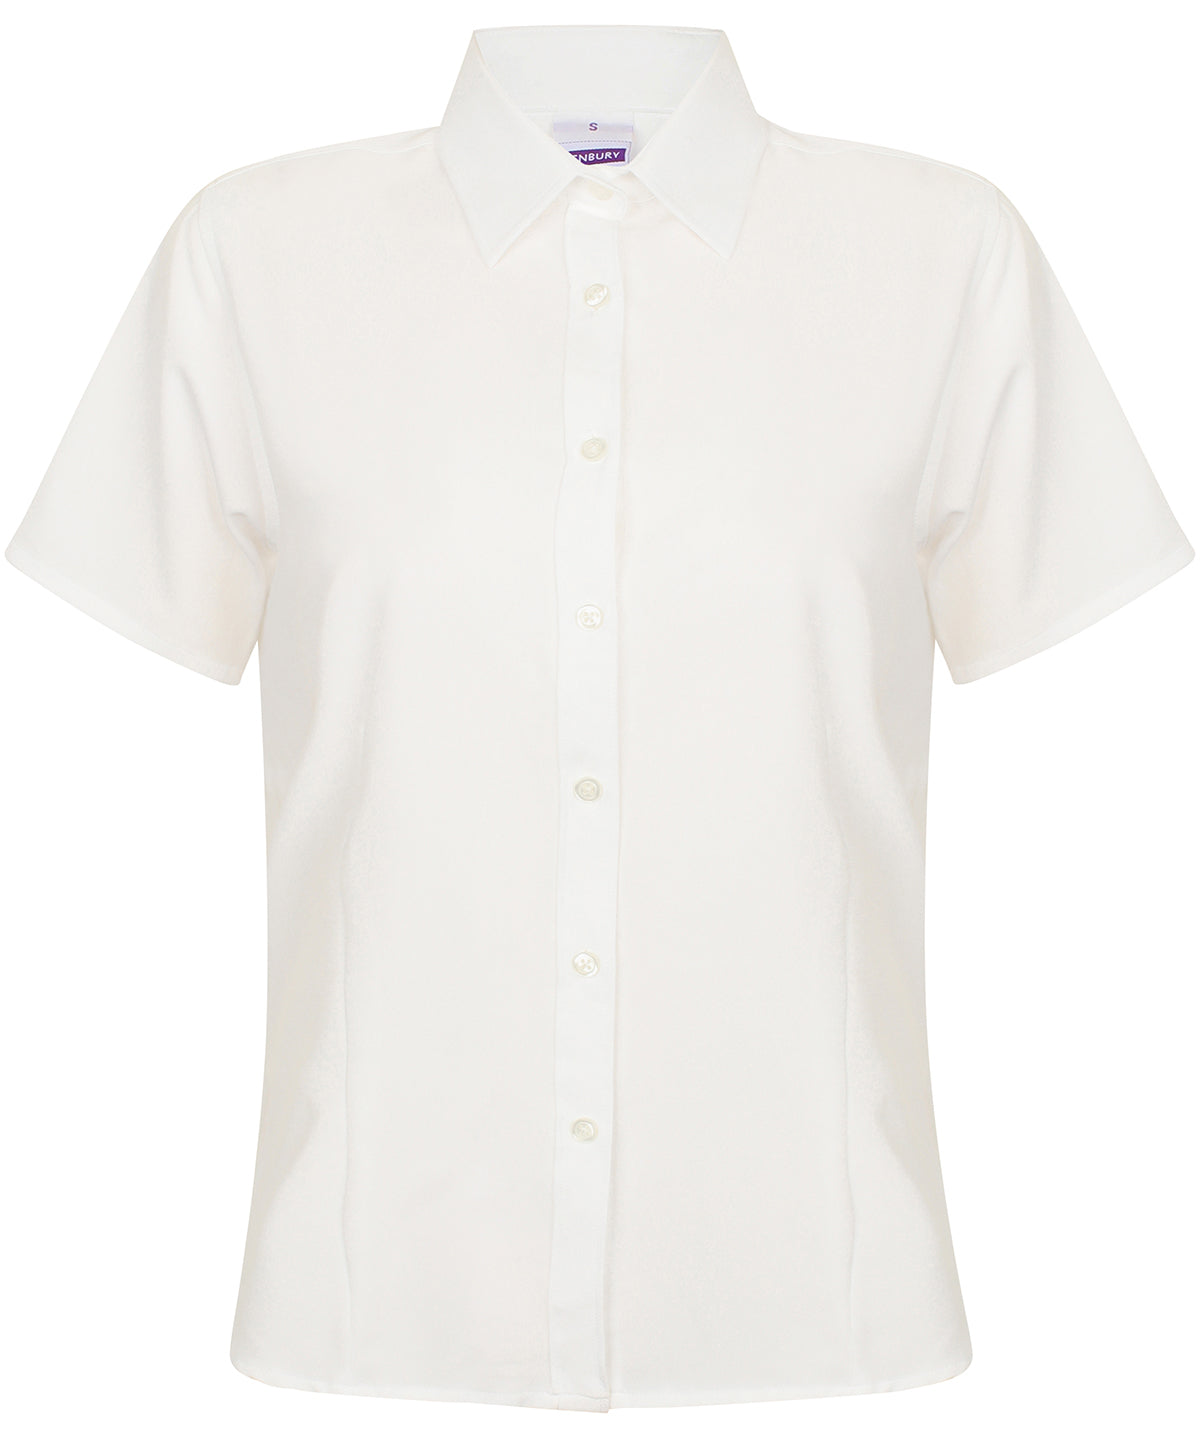 Bolir - Women's Wicking Antibacterial Short Sleeve Shirt